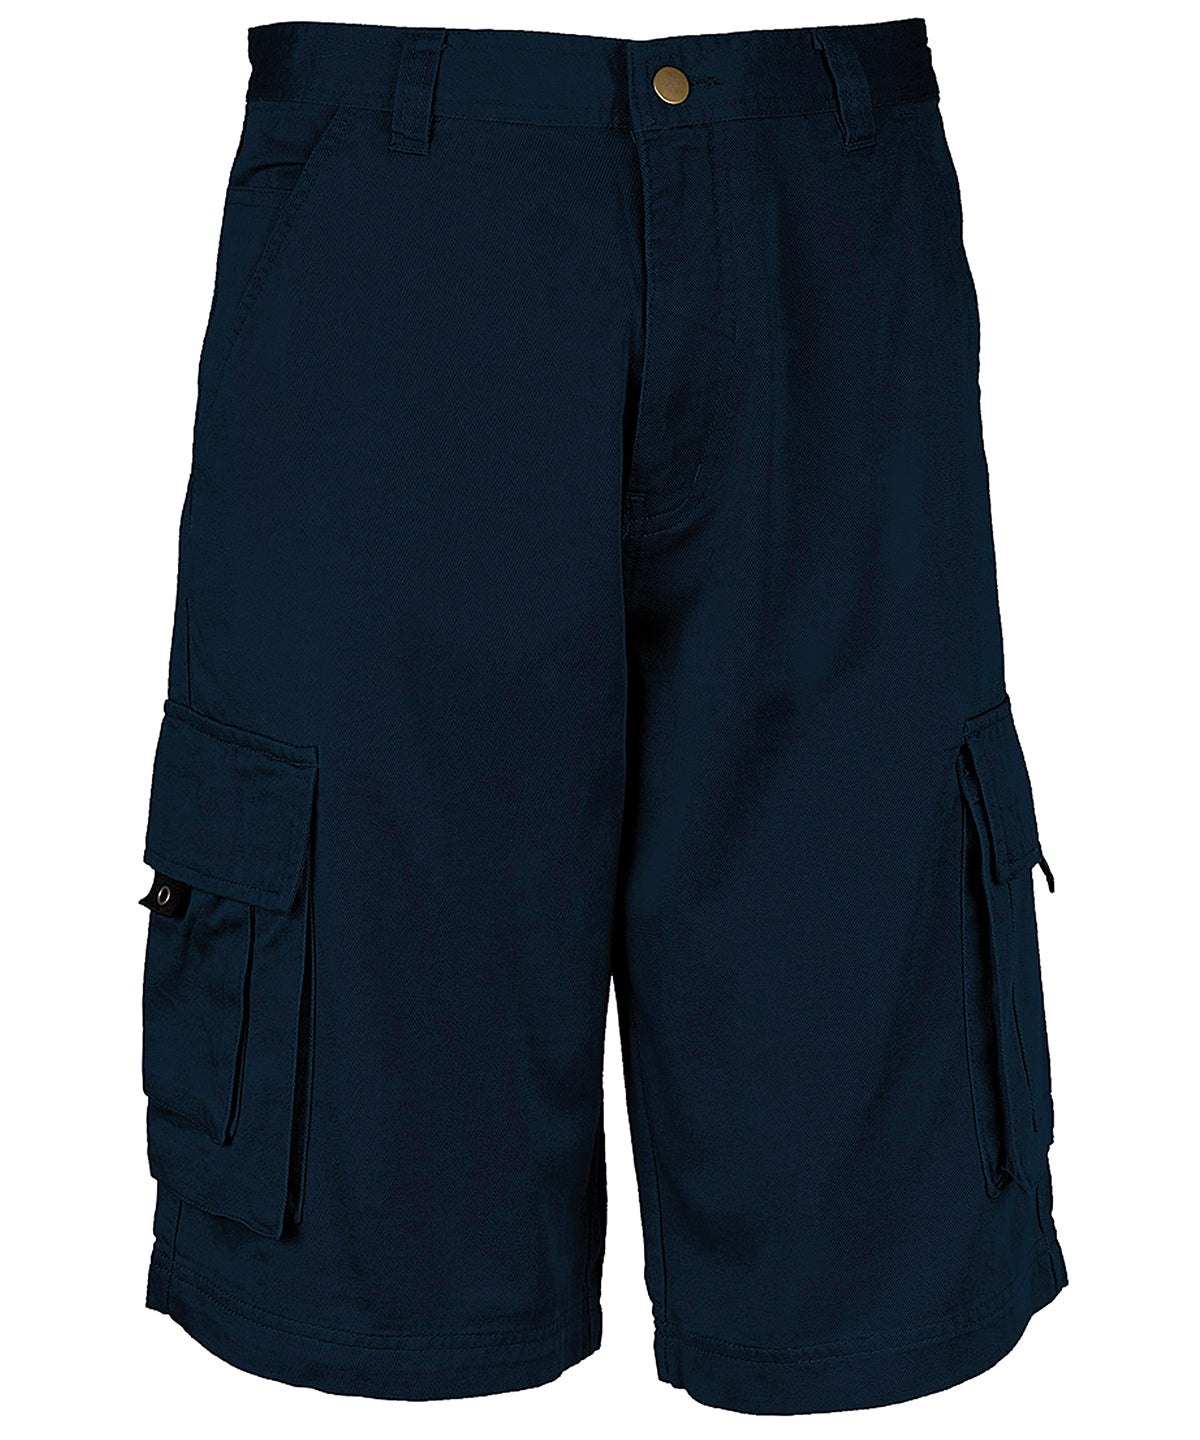 Stuttbuxur - Multi Pocket Shorts